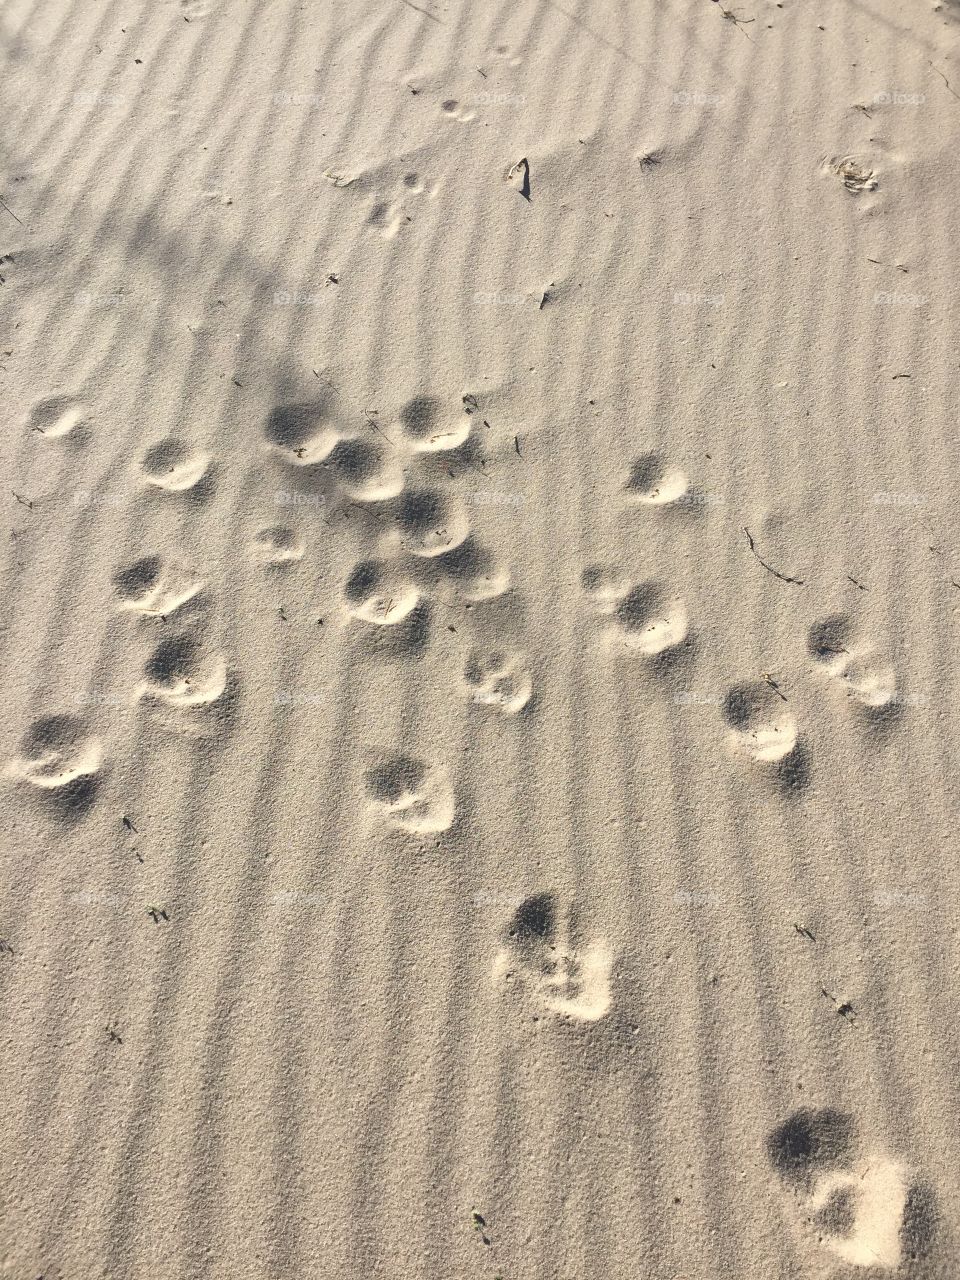 Sandy Animal tracks